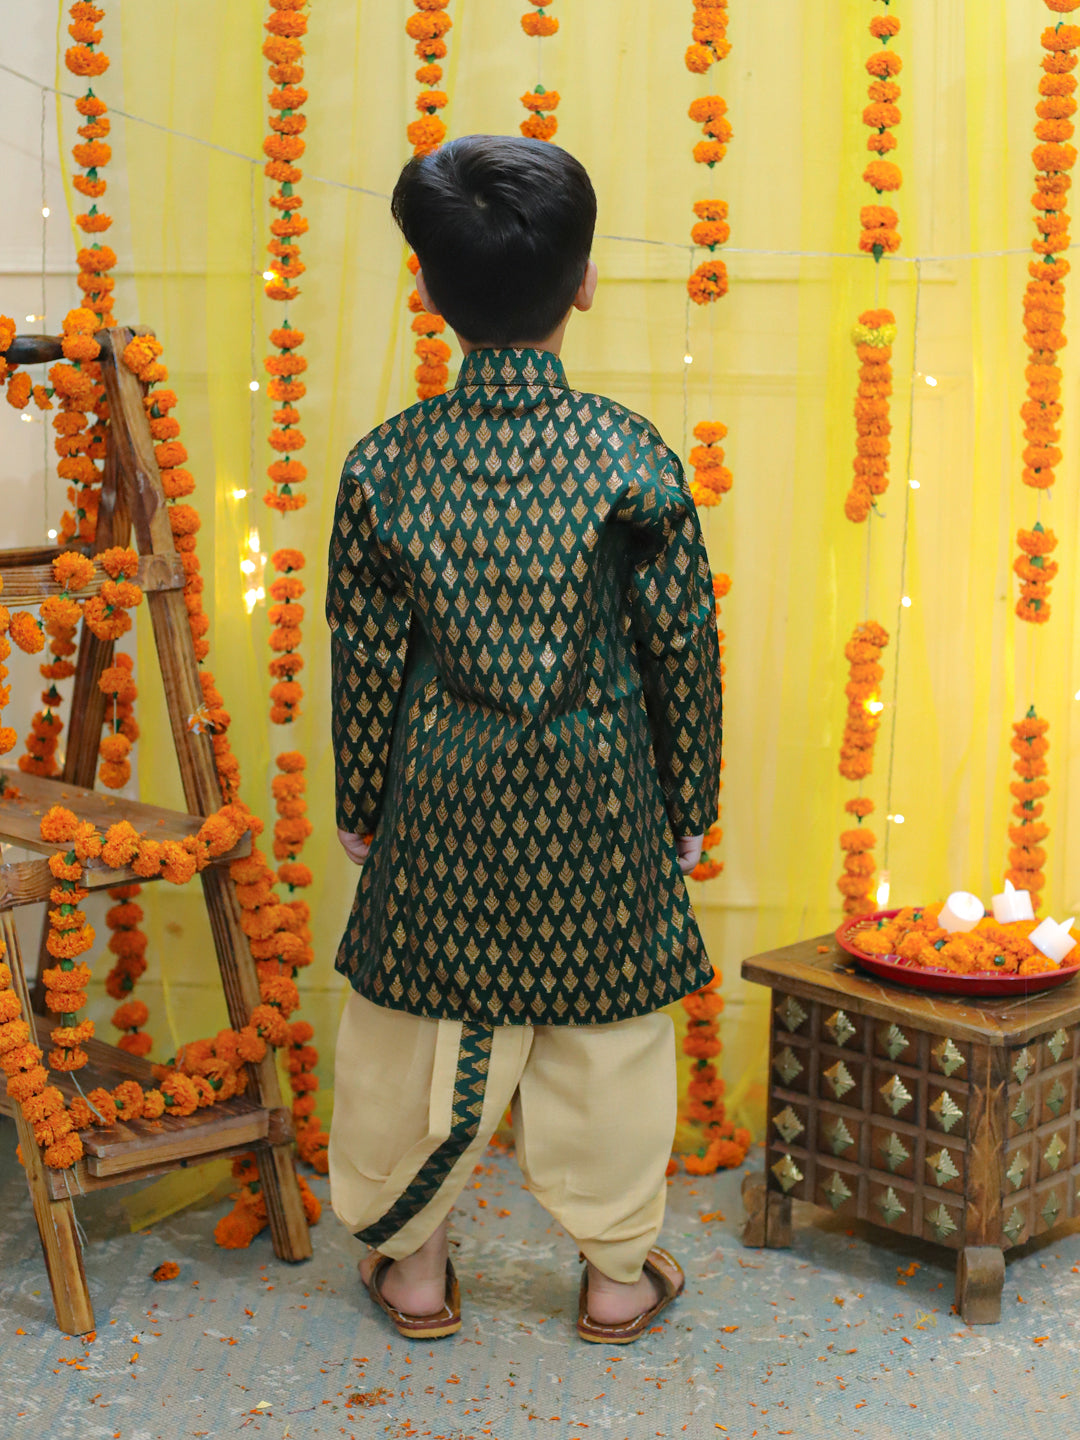 BownBee Boys Ethnic Festive Wear Jacquard Full Sleeve Sherwani with Dhoti - Green